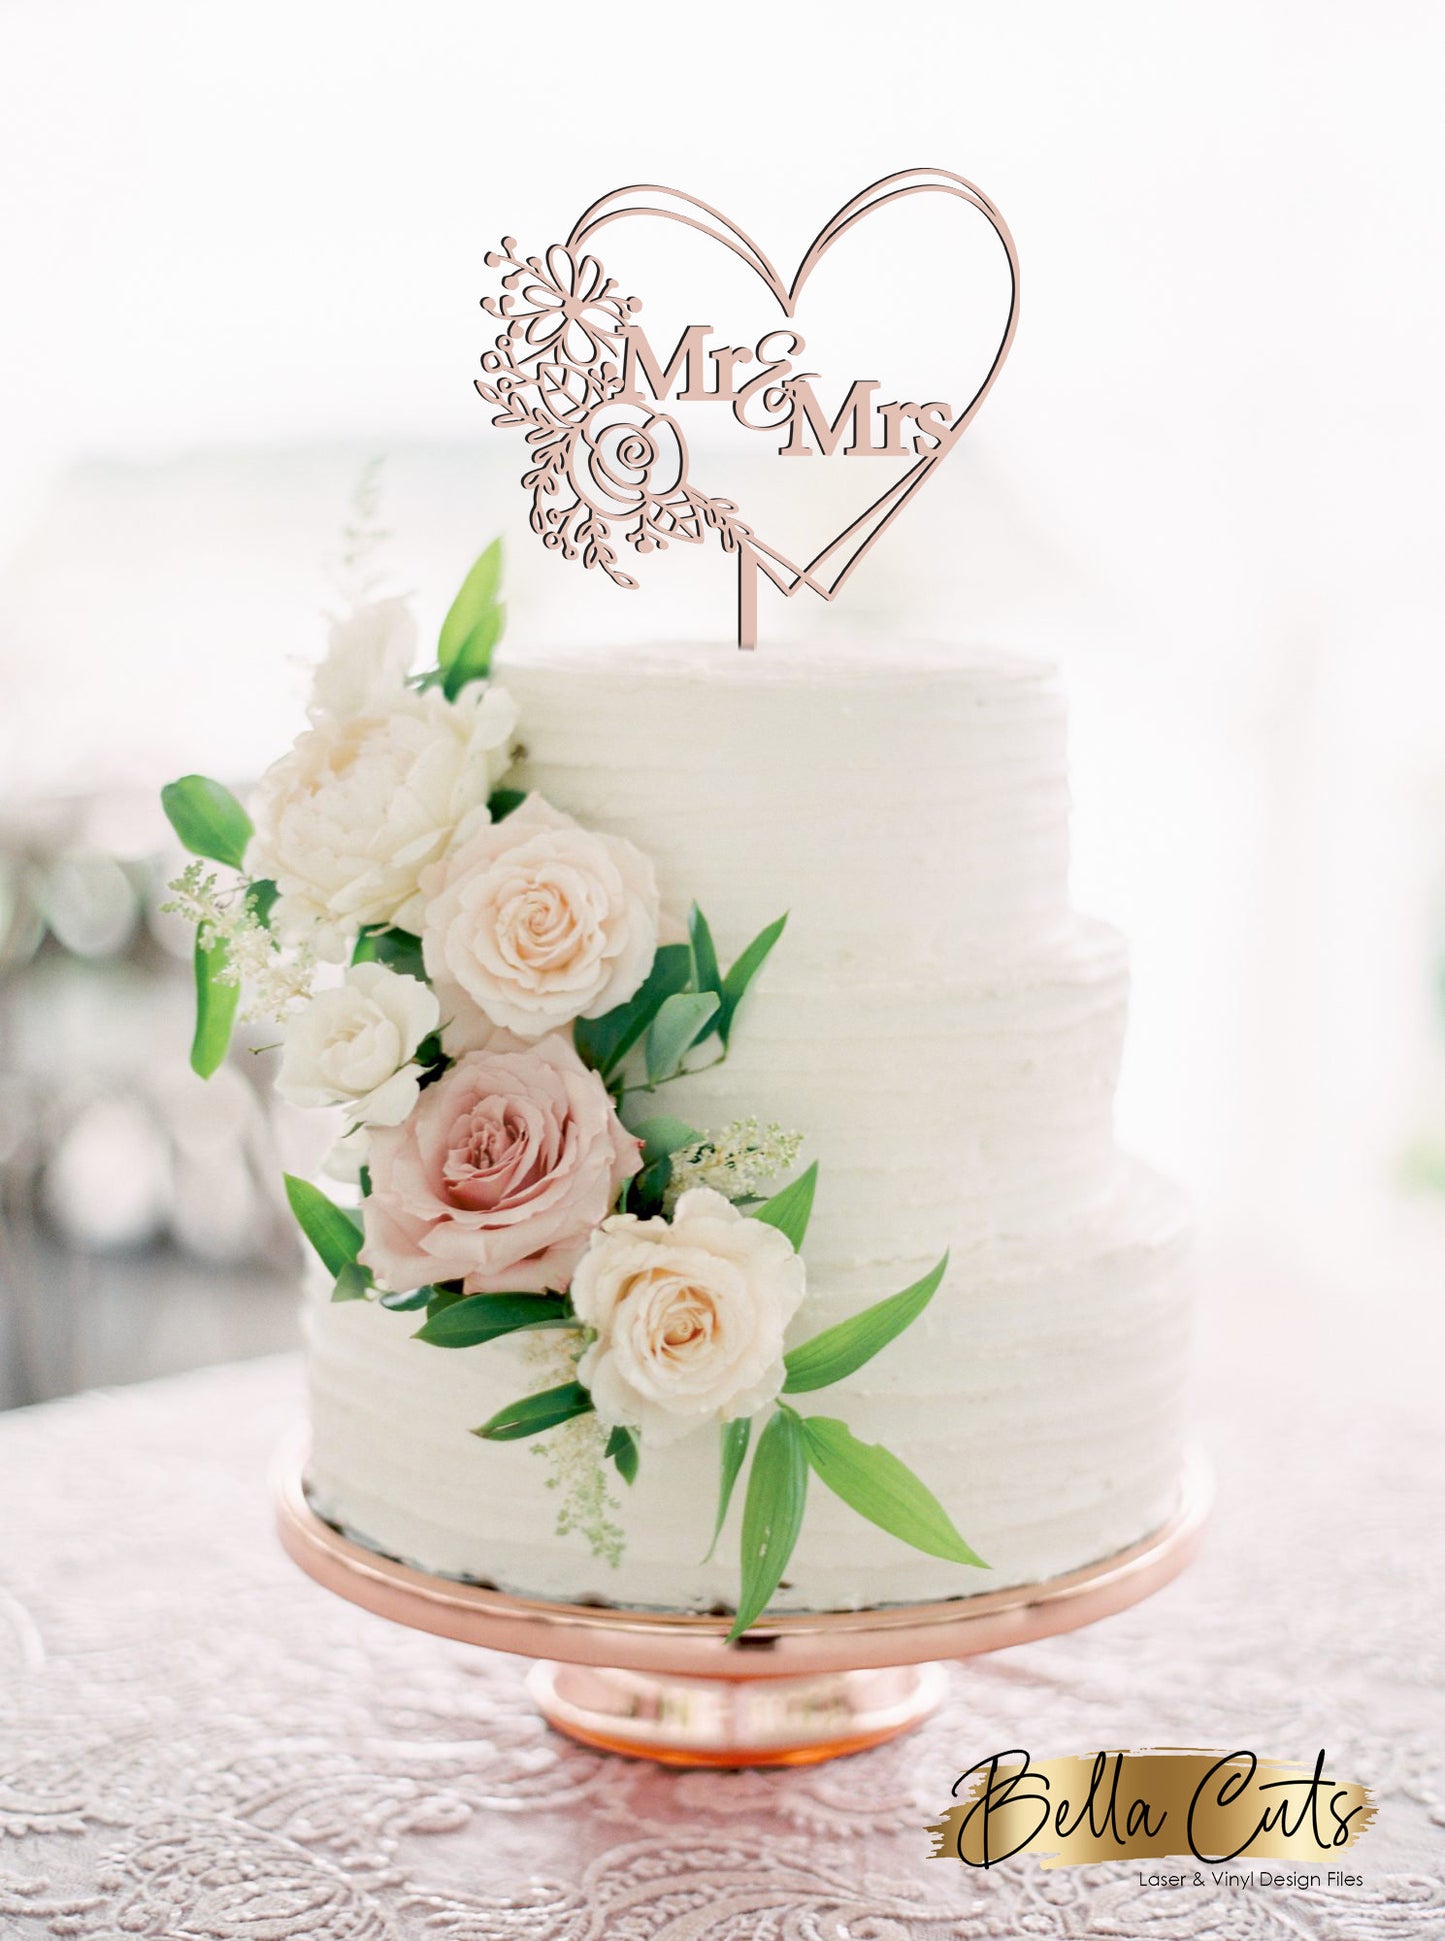 Mr & Mrs Vintage Wedding Cake Topper, Laser Engraved Cut Digital File Download, SVG DXF, Glowforge Ready, Commercial Use #CT-MM101